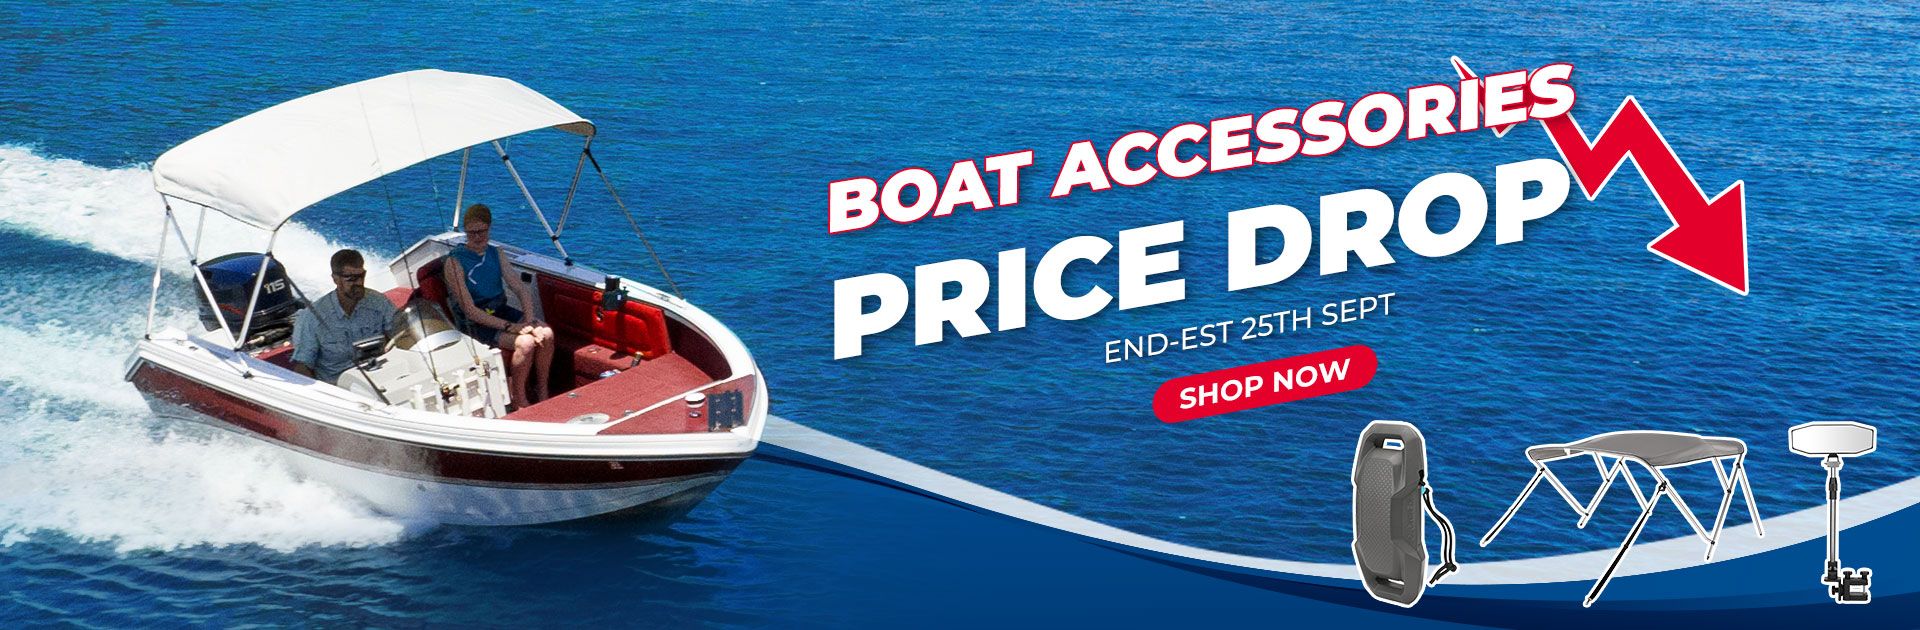 Kemimoto boat accessories - price drop!